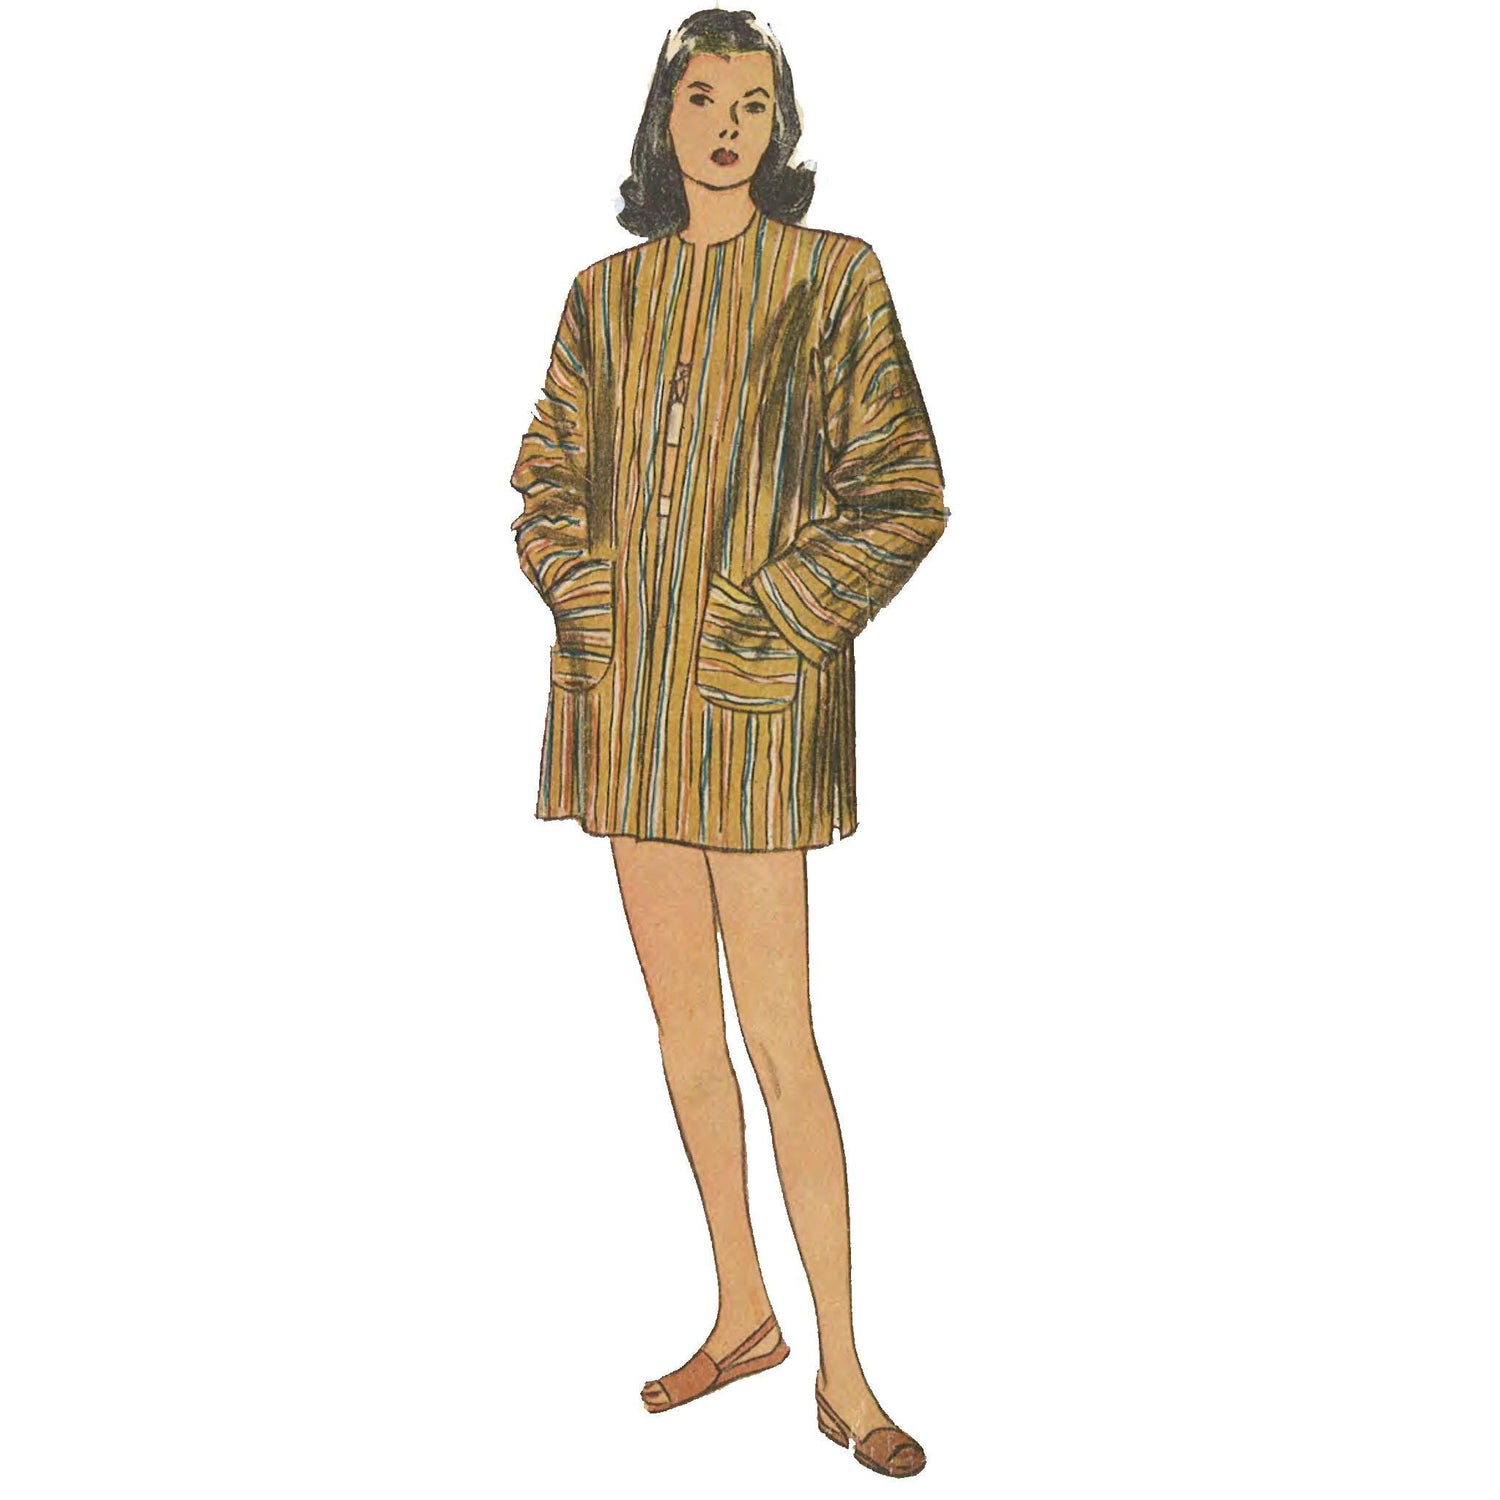 Woman wearing a beach coat